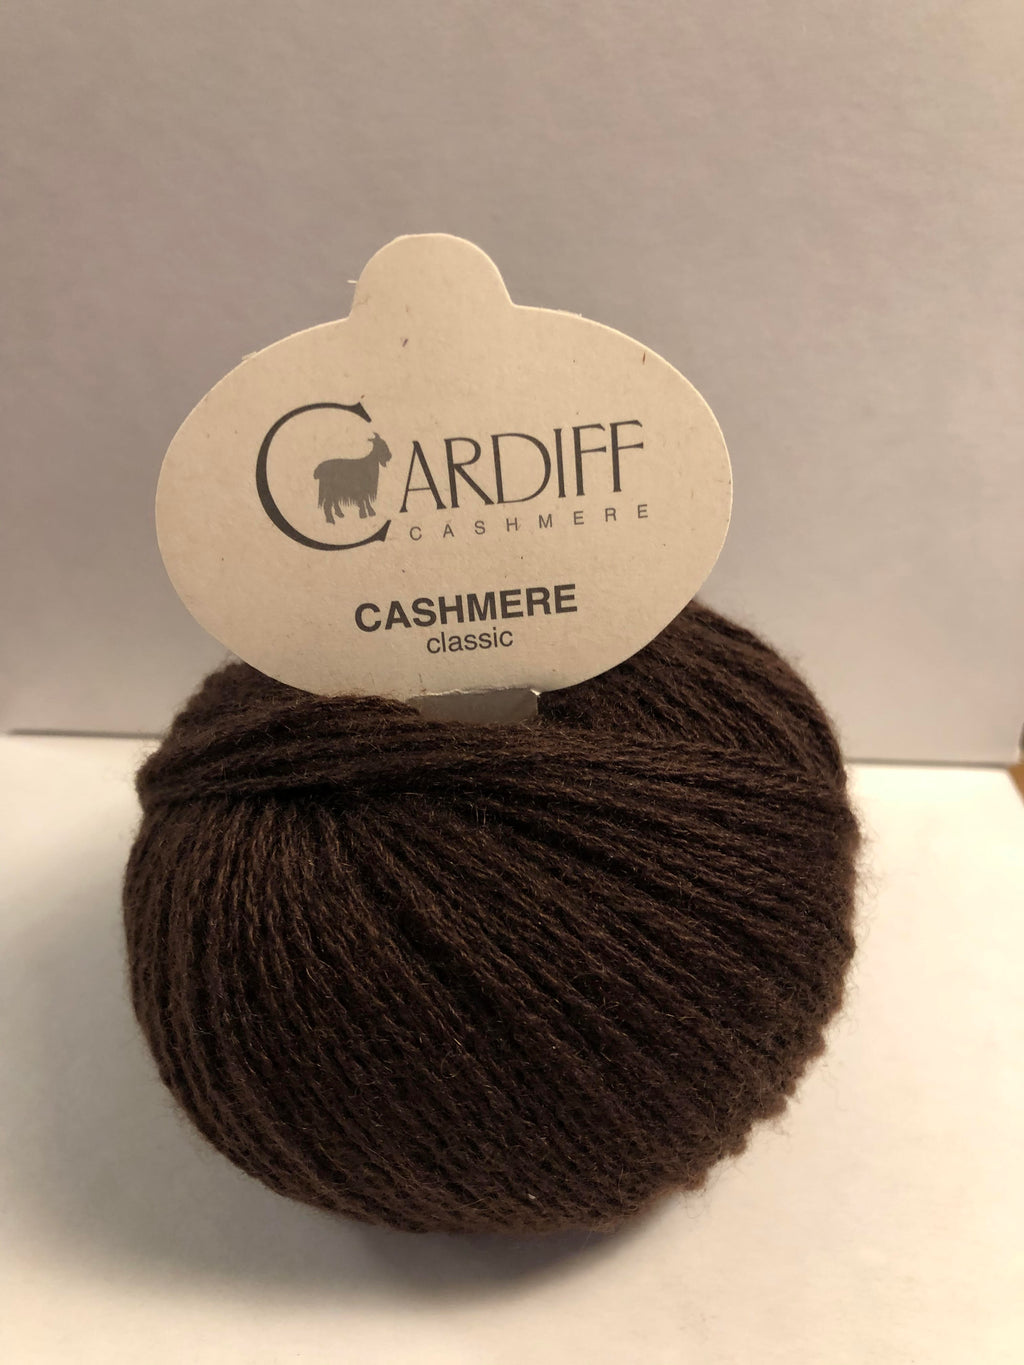 Cardiff Cashmere Classic Cacao 643